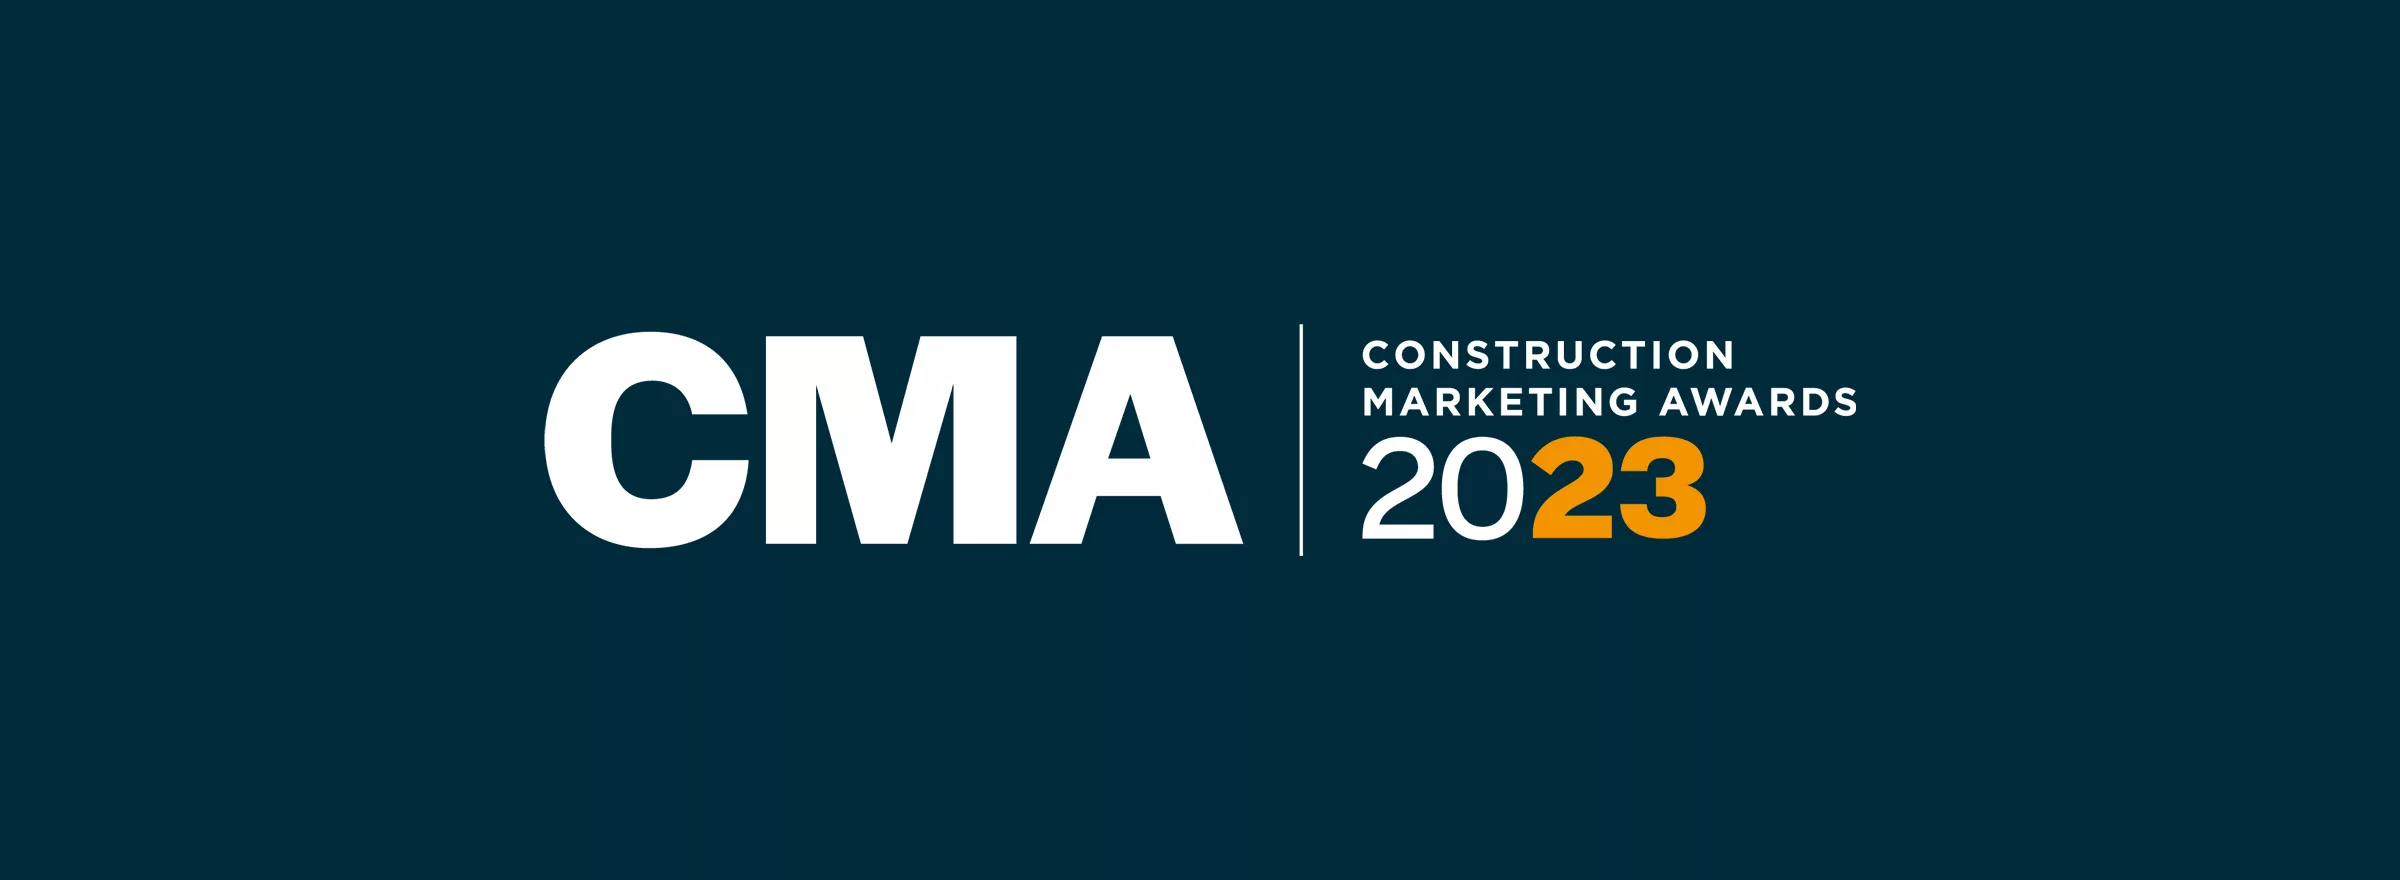 Construction Marketing Awards finalist logo